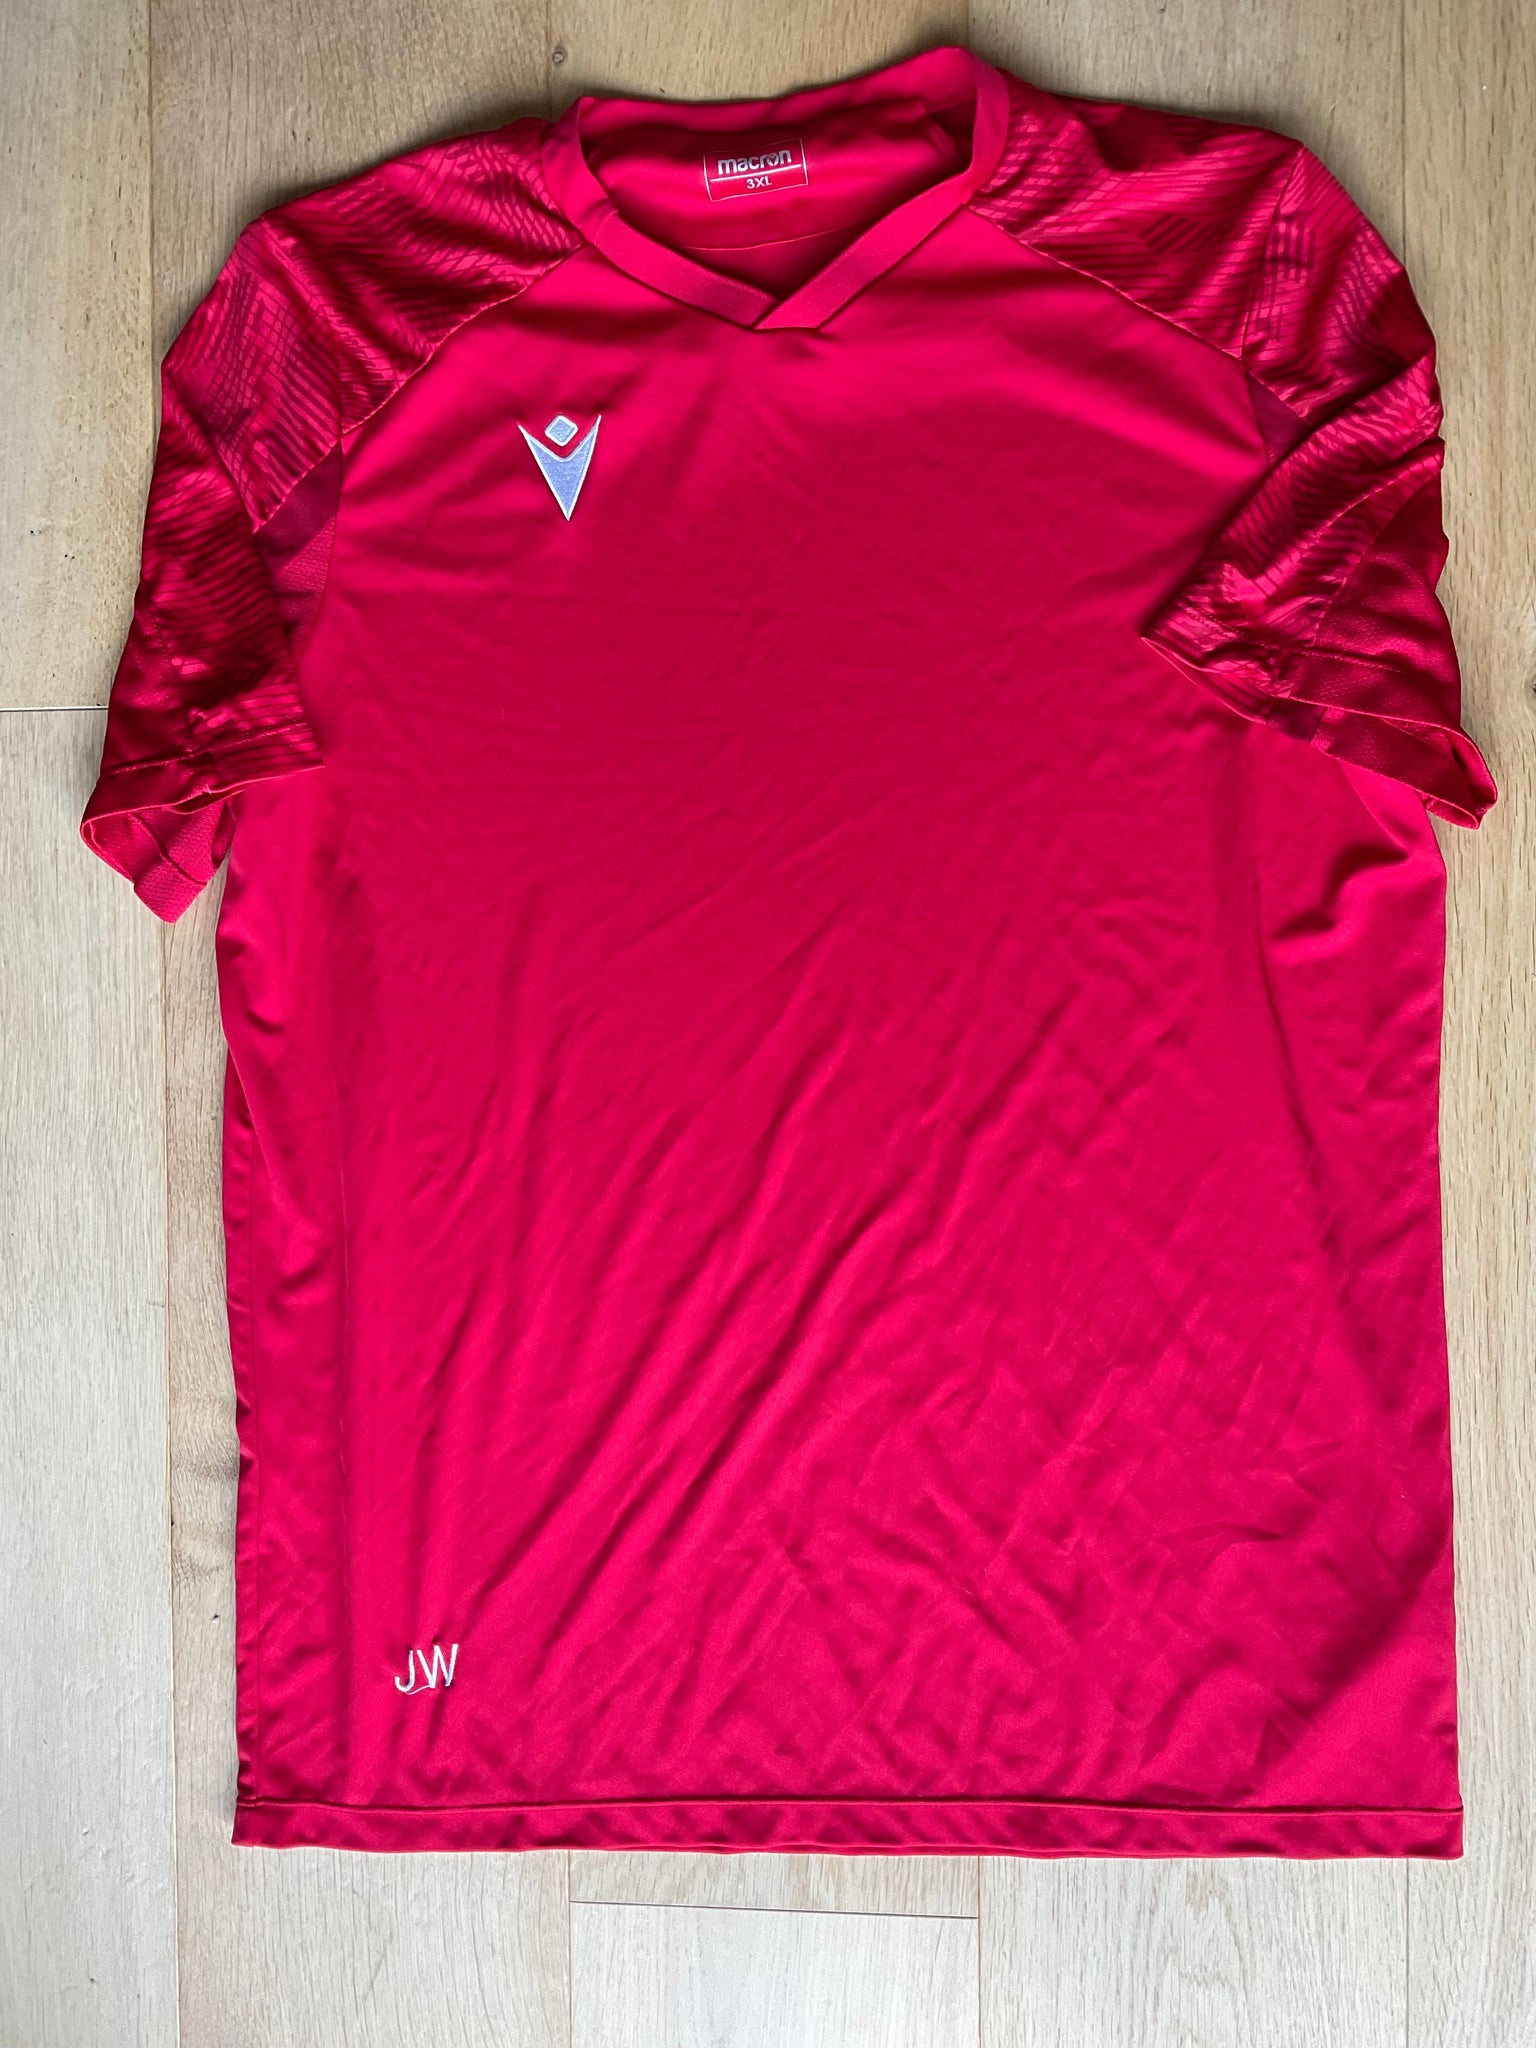 Joe Worsley - Georgia Rugby - Gym / Training T-Shirt [Red & Black]